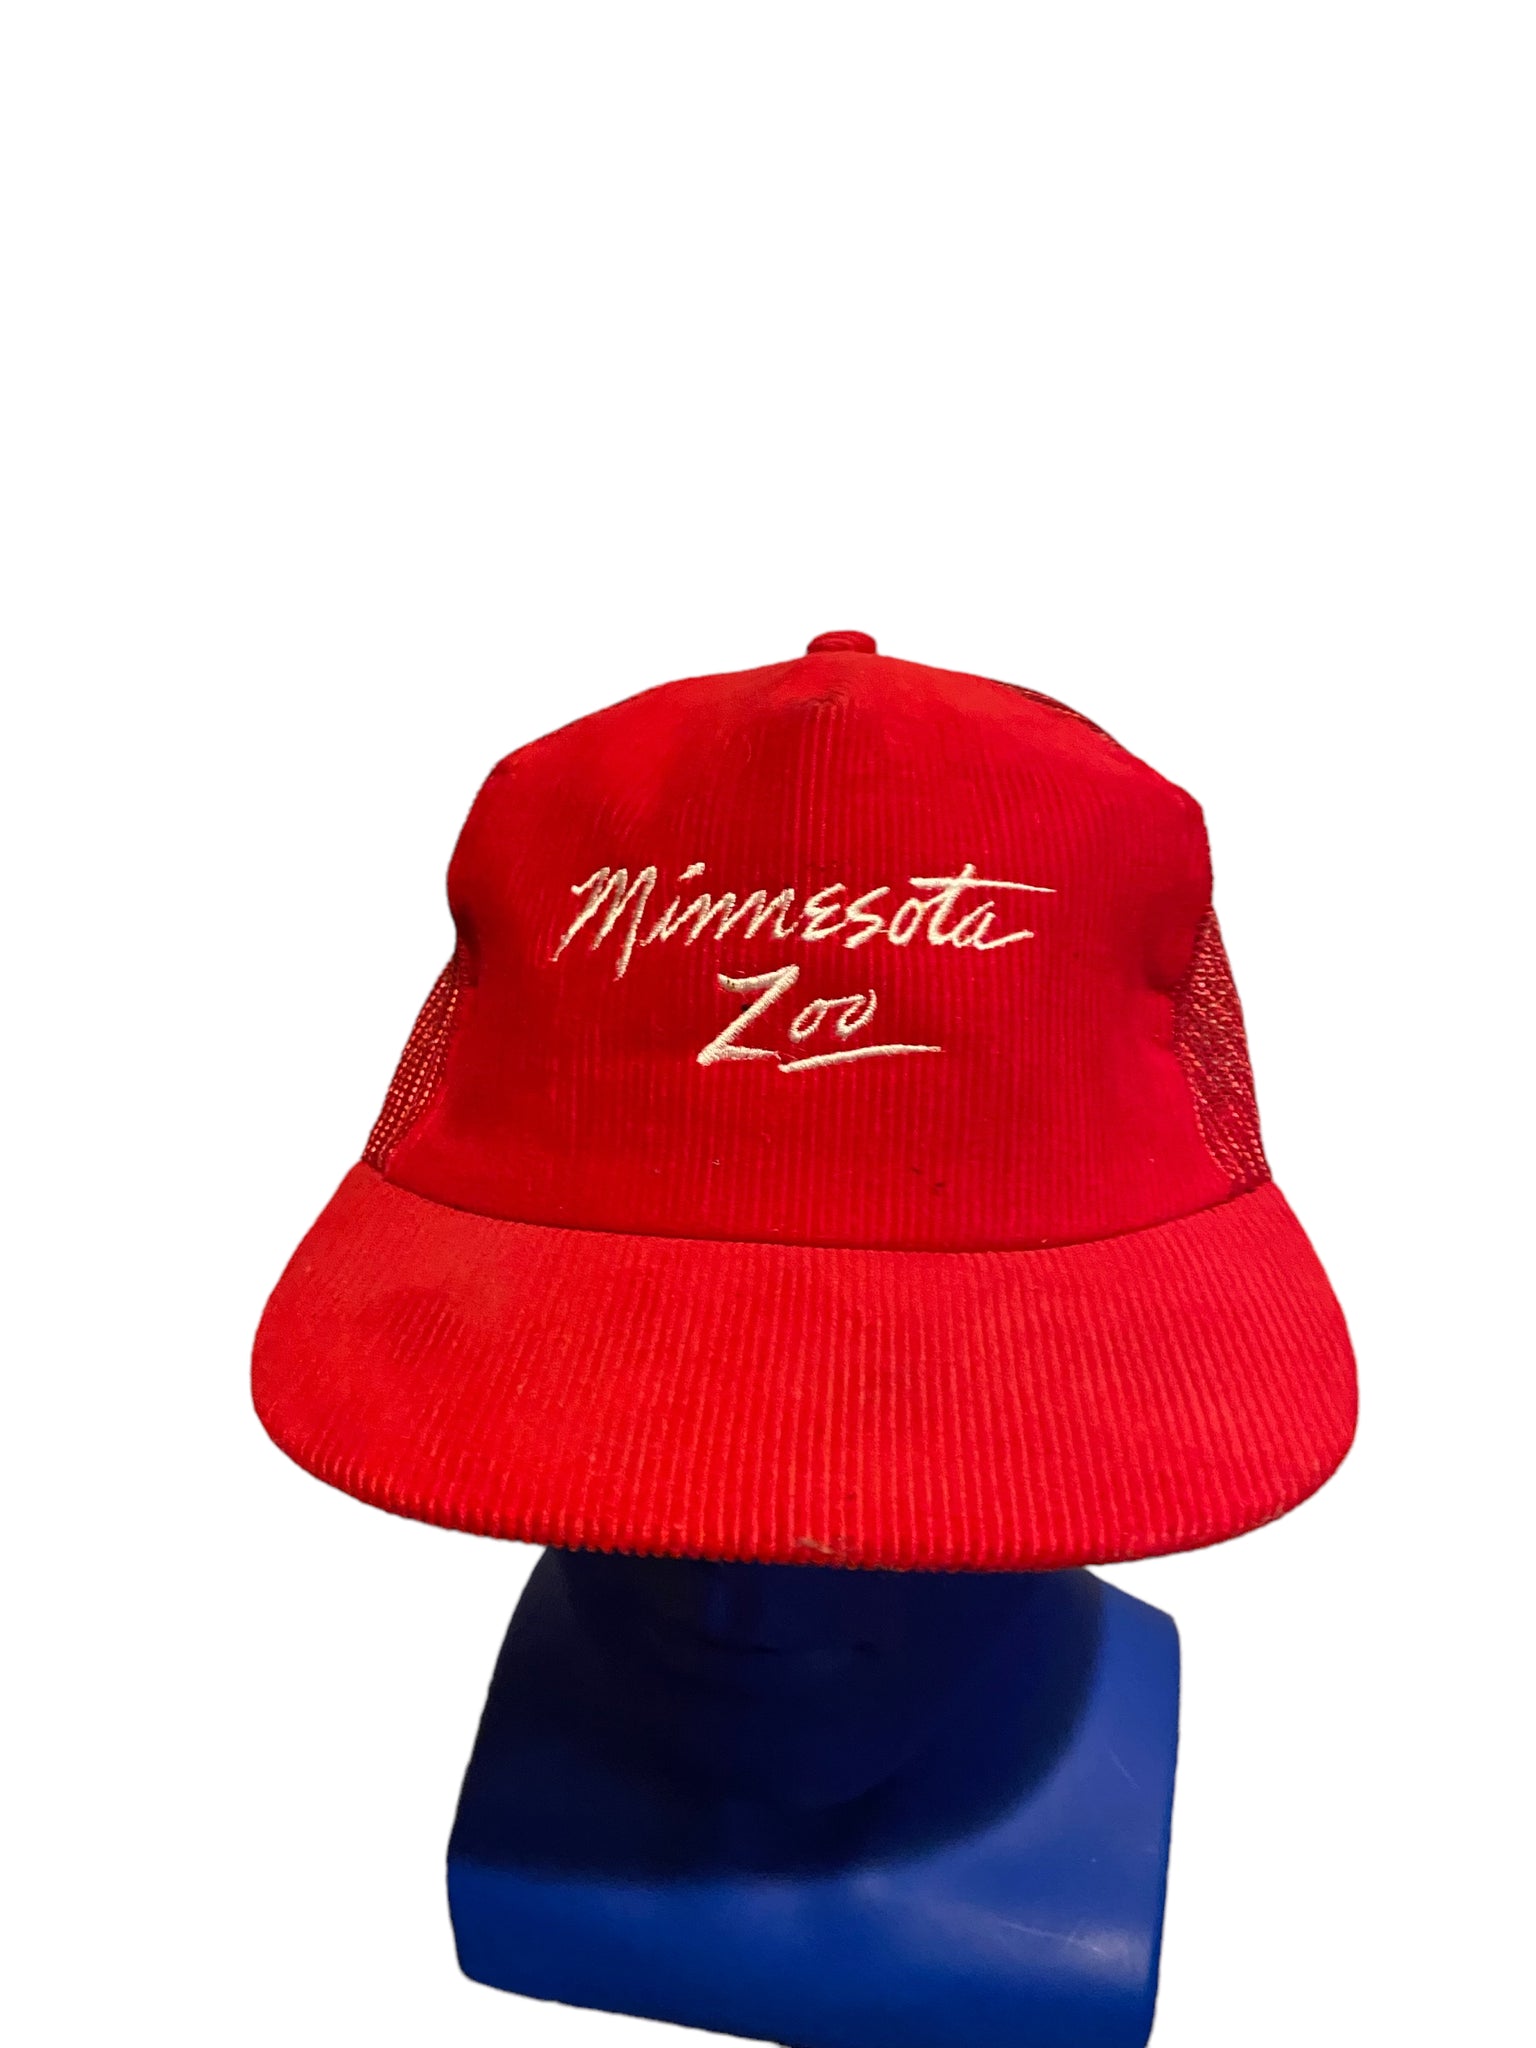 vintage minnesota zoo script corduroy trucker hat snapback Red Made In Korea